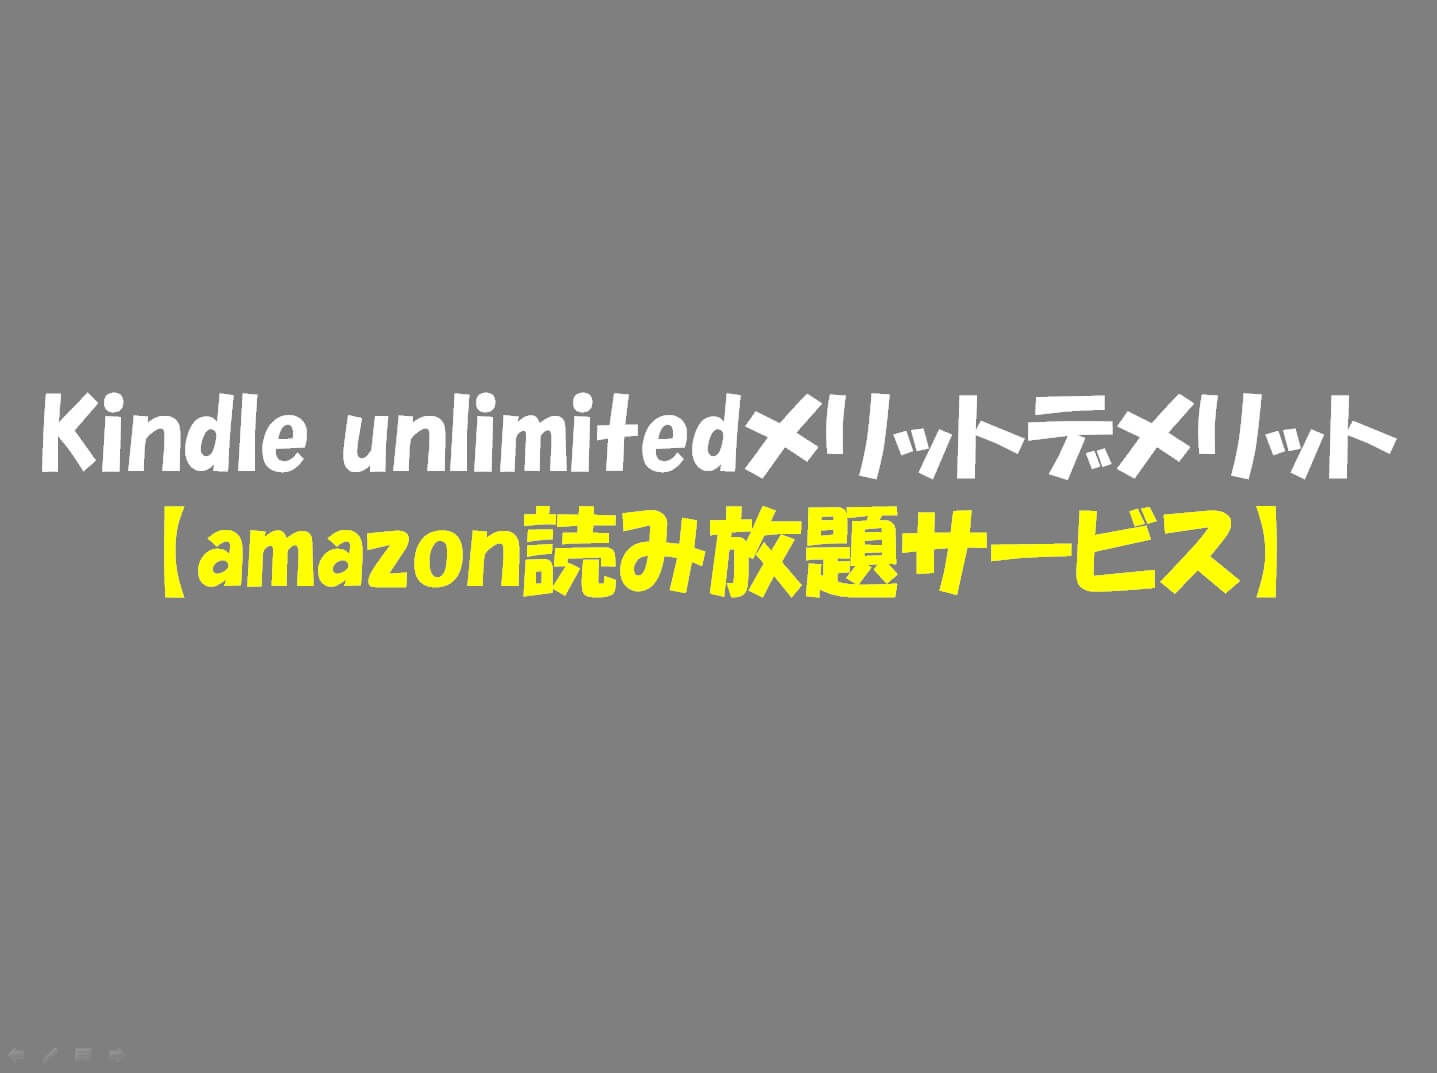 Amazon読み放題サービス Kindle Unlimited のメリット デメリット 人生にスパイスを